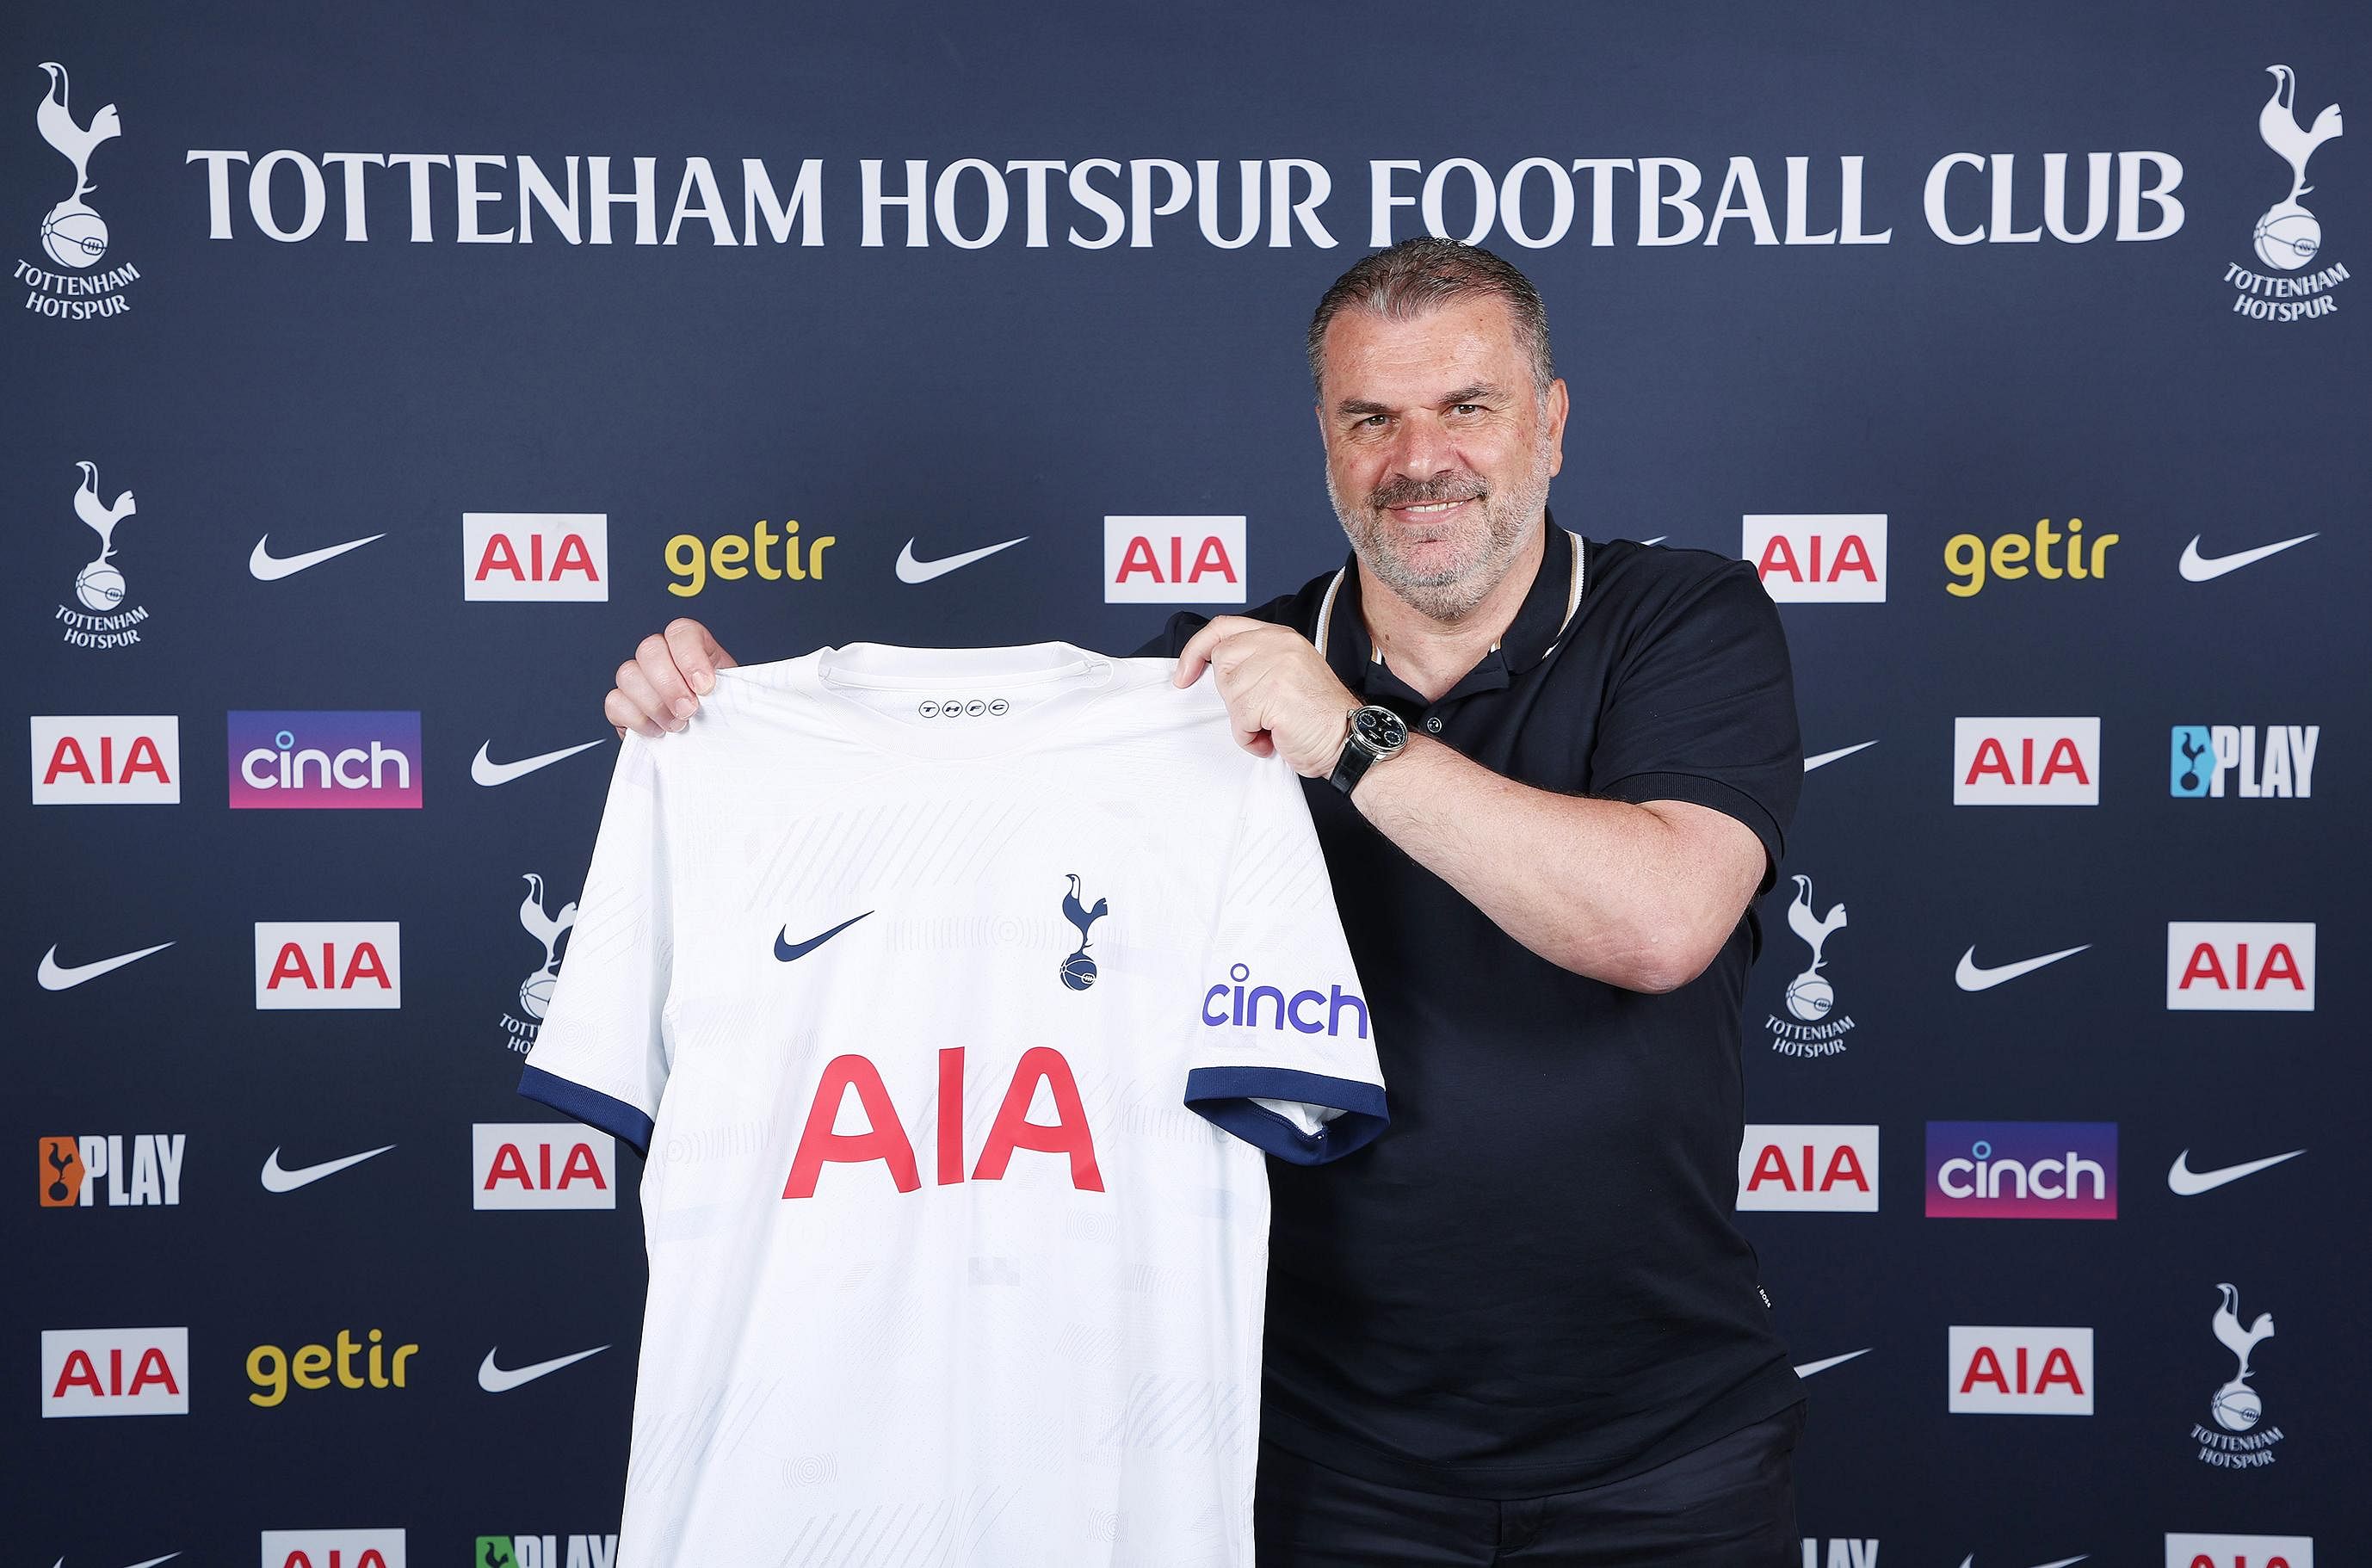 Playing ‘Ange-ball’ is Tottenham’s best chance to win something, says Osvaldo Ardiles